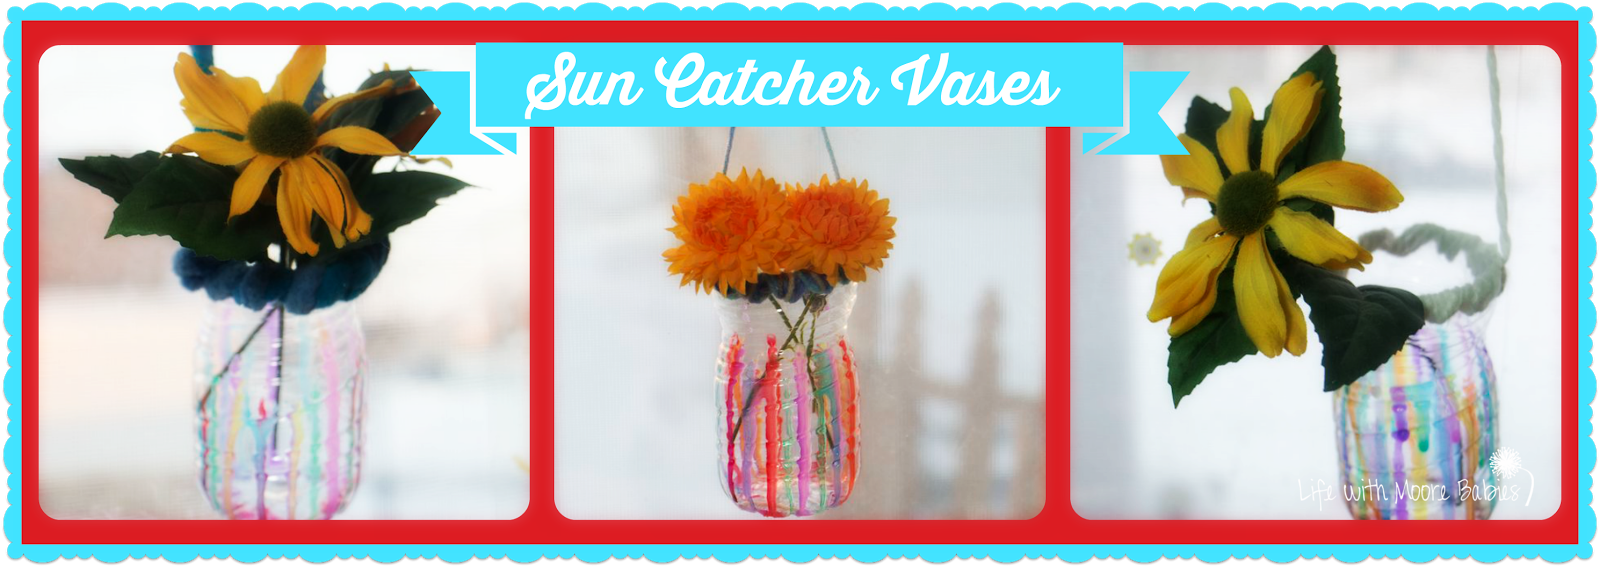 Sun Catcher Vases